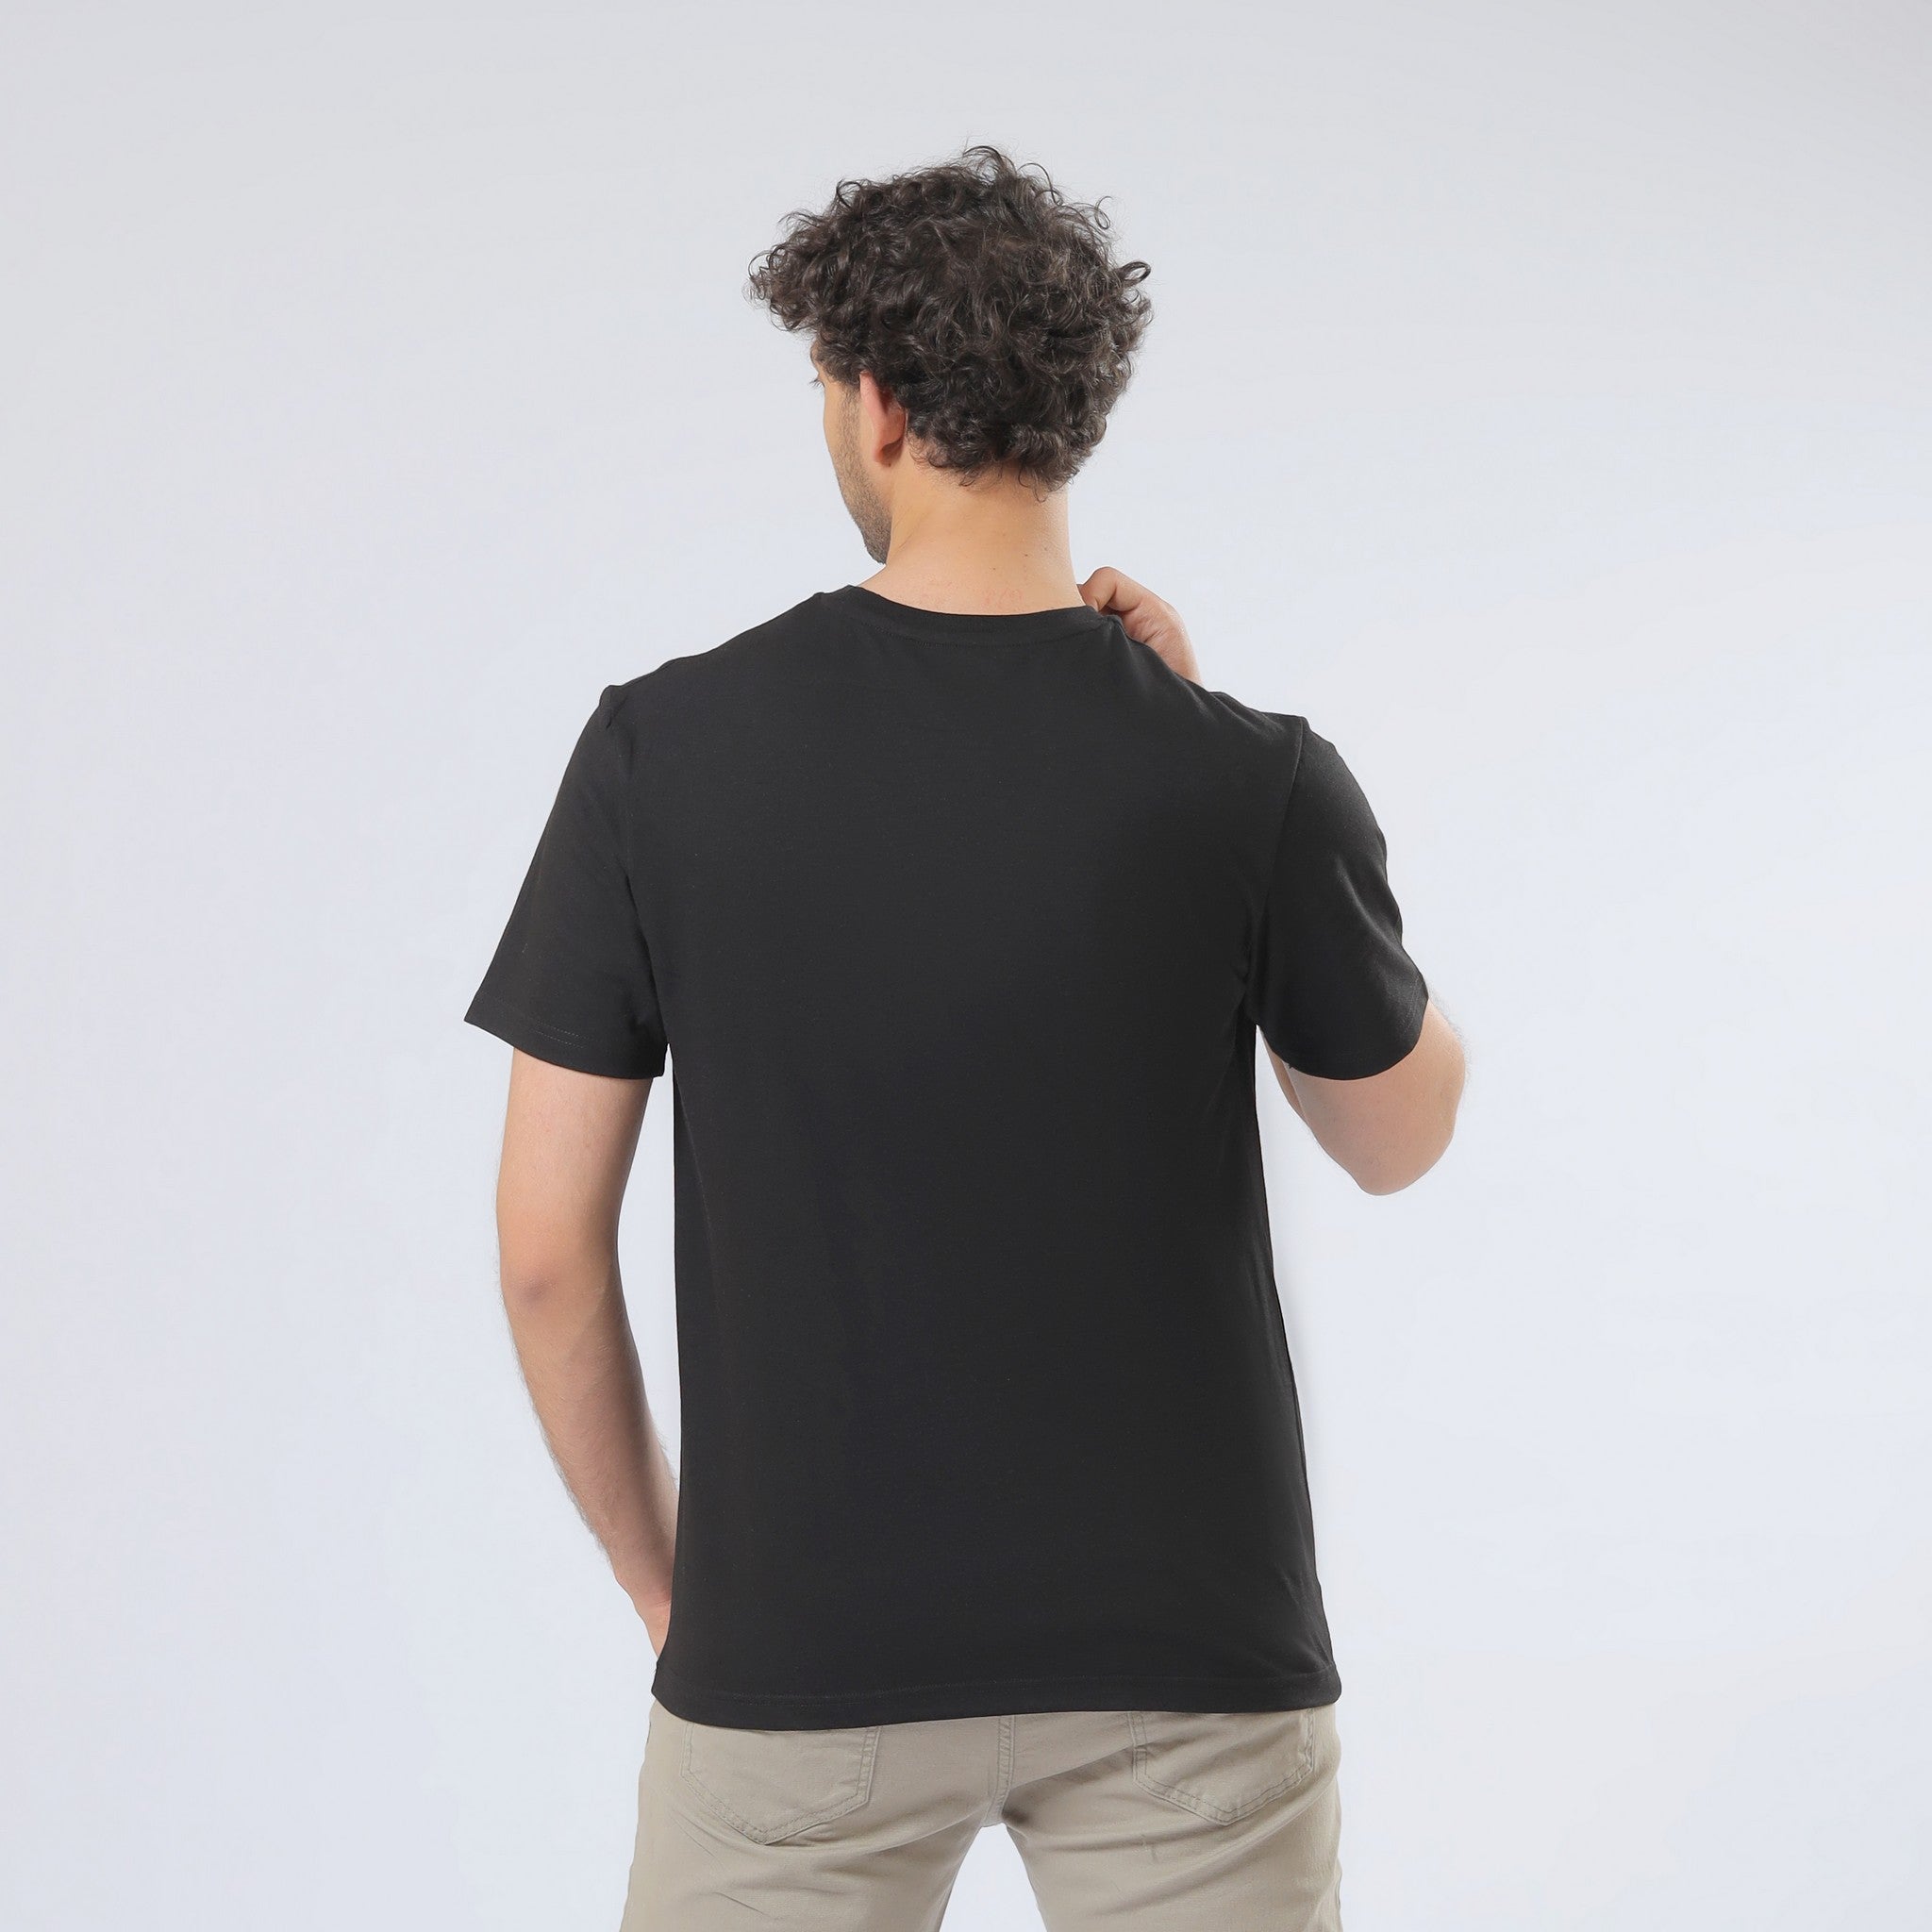 Premium Print Black T-Shirt